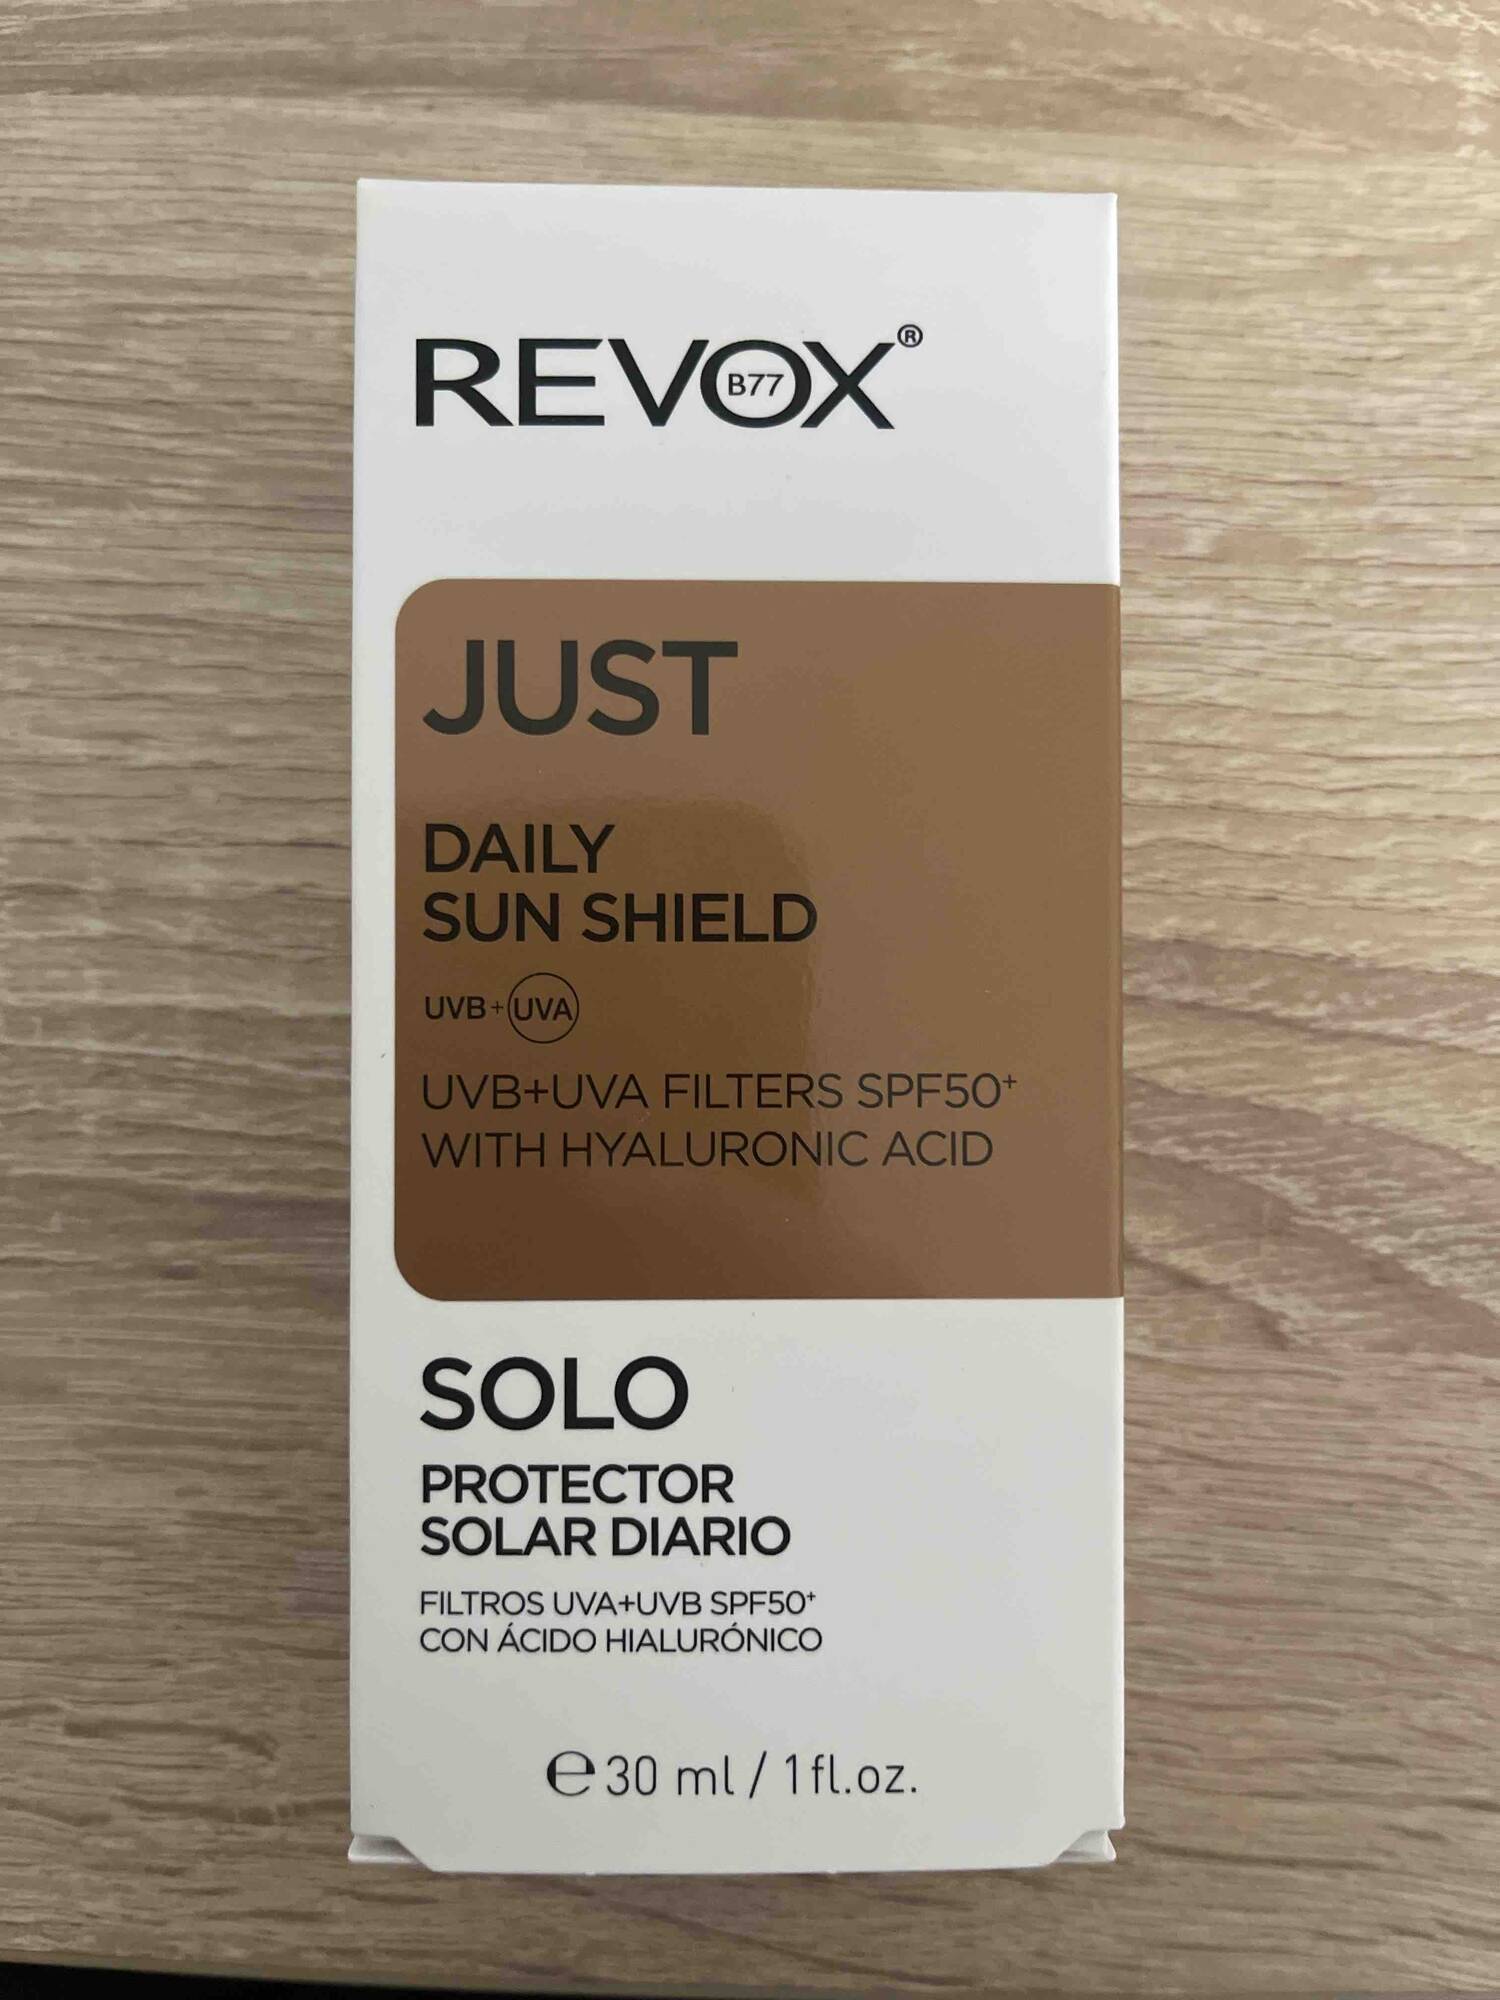 REVOX - Just - Daily sun shield SPF 50+